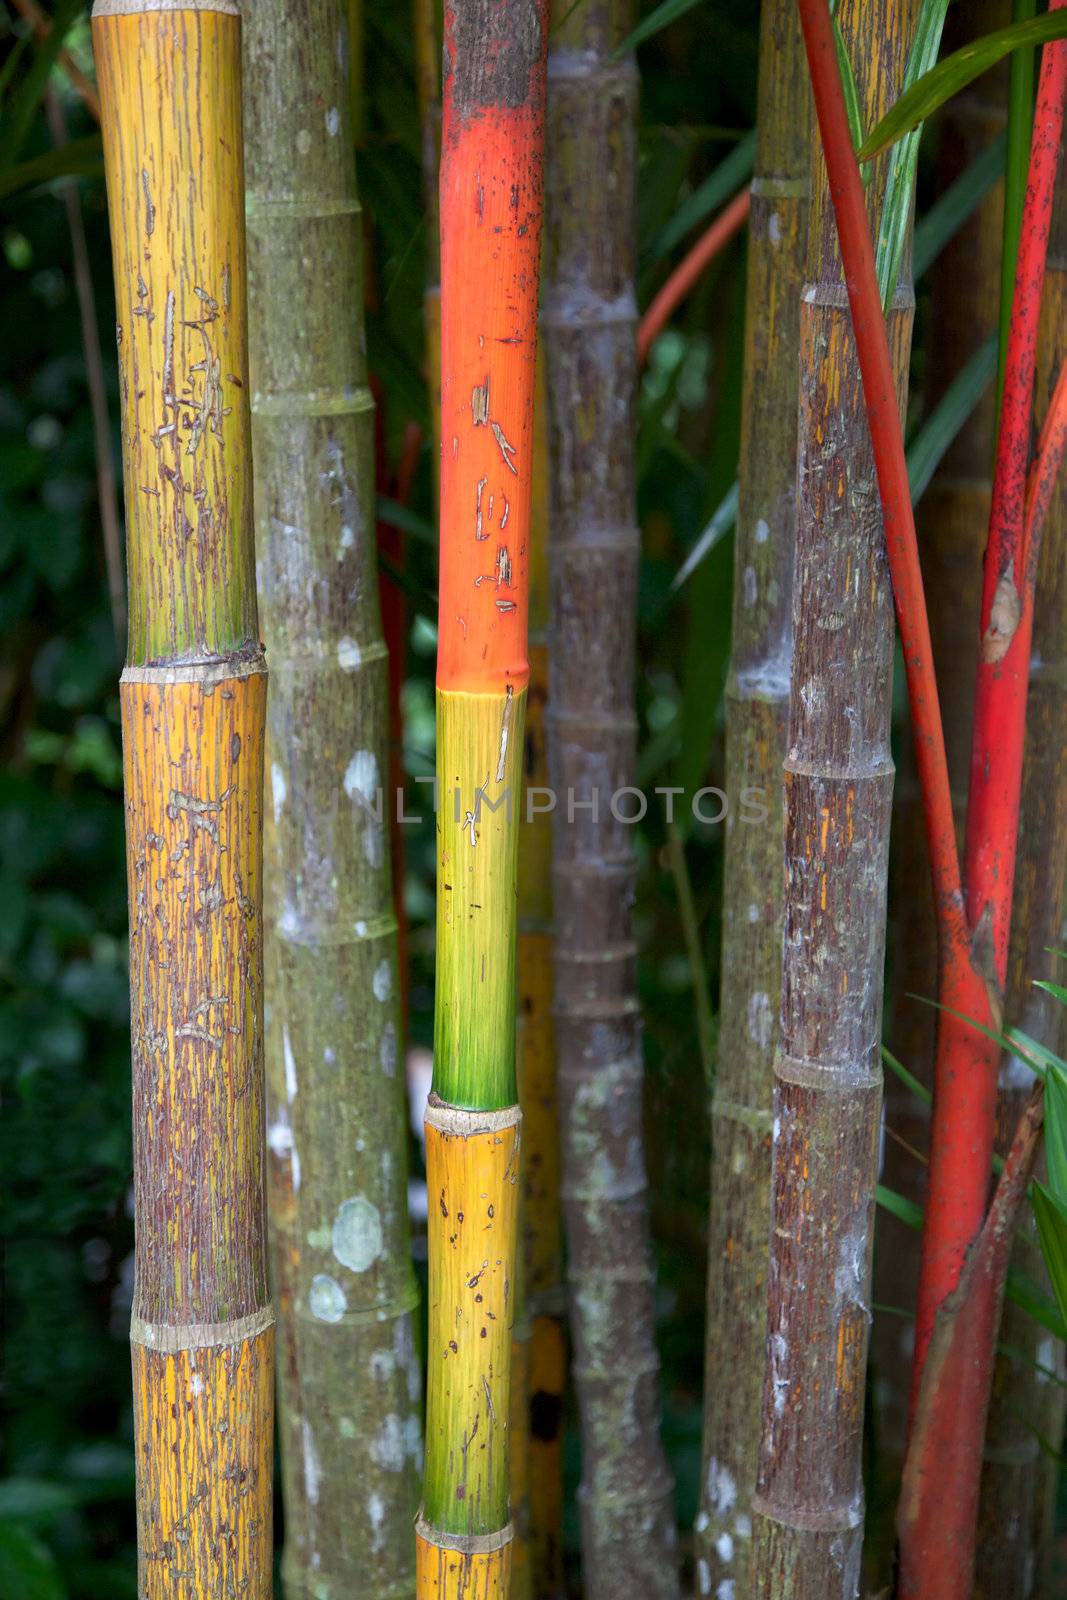 Bamboo stems growing in the Singapore Botanic Gardens.